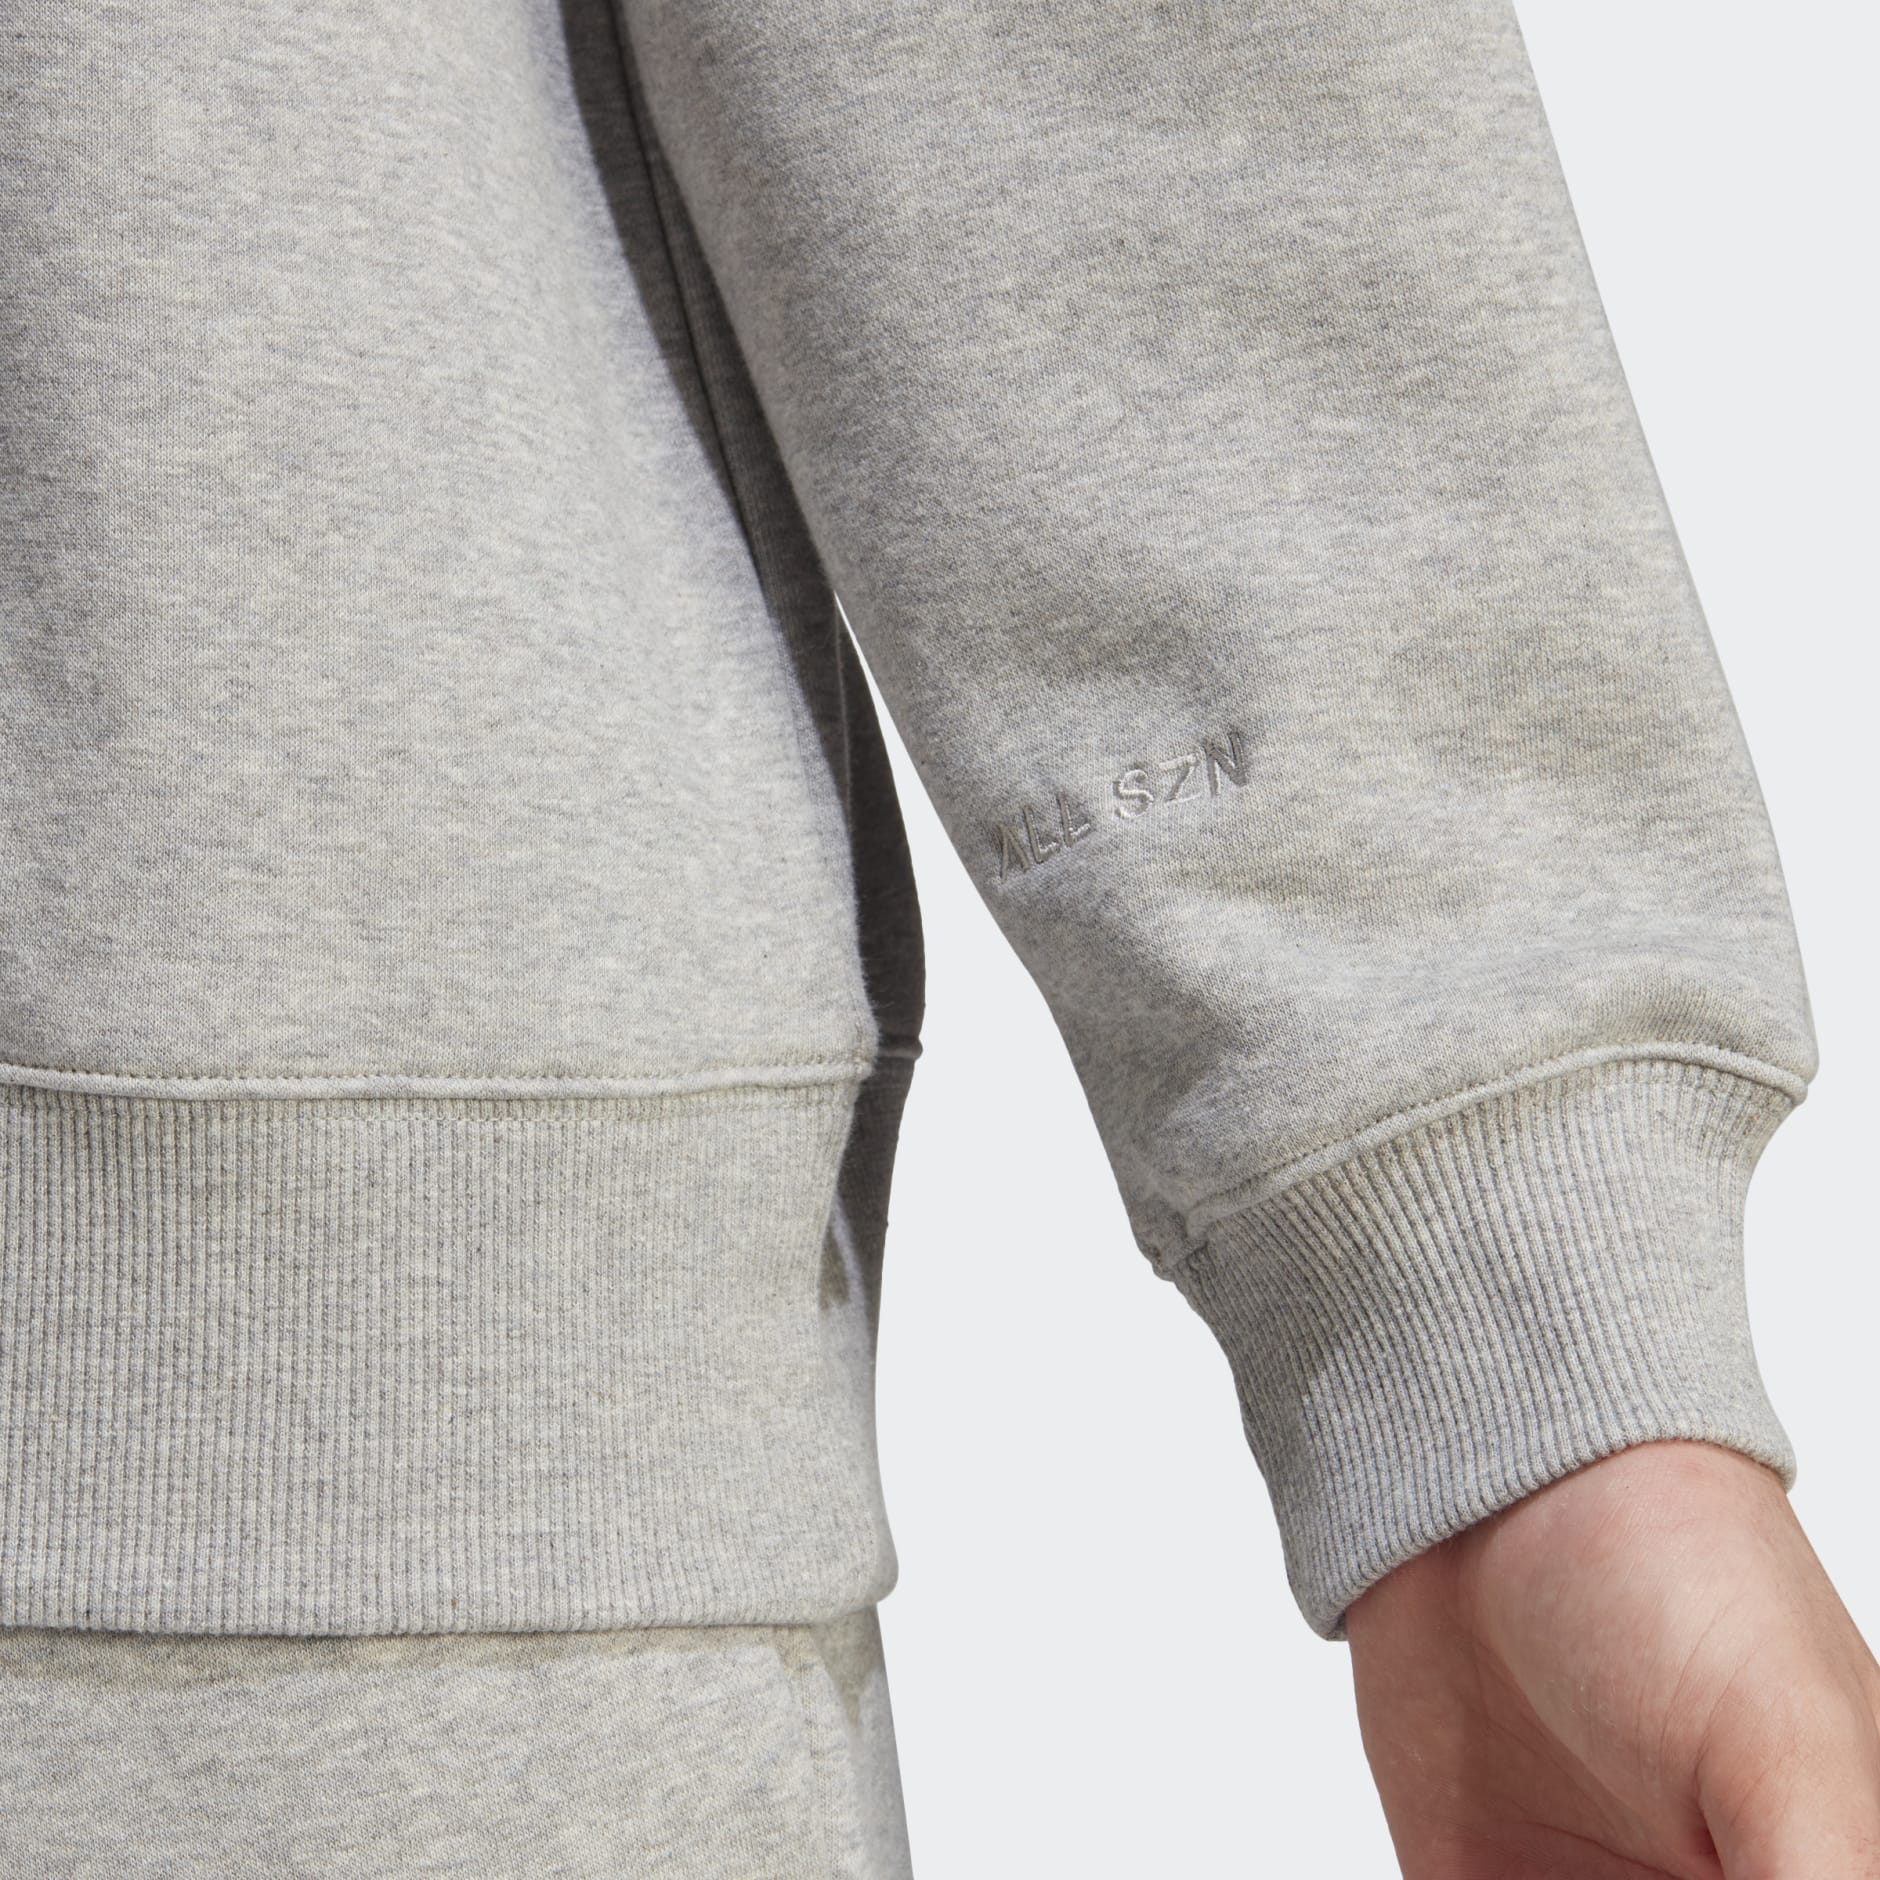 Clothing - All South Africa adidas Sweatshirt SZN Graphic Grey Fleece - 